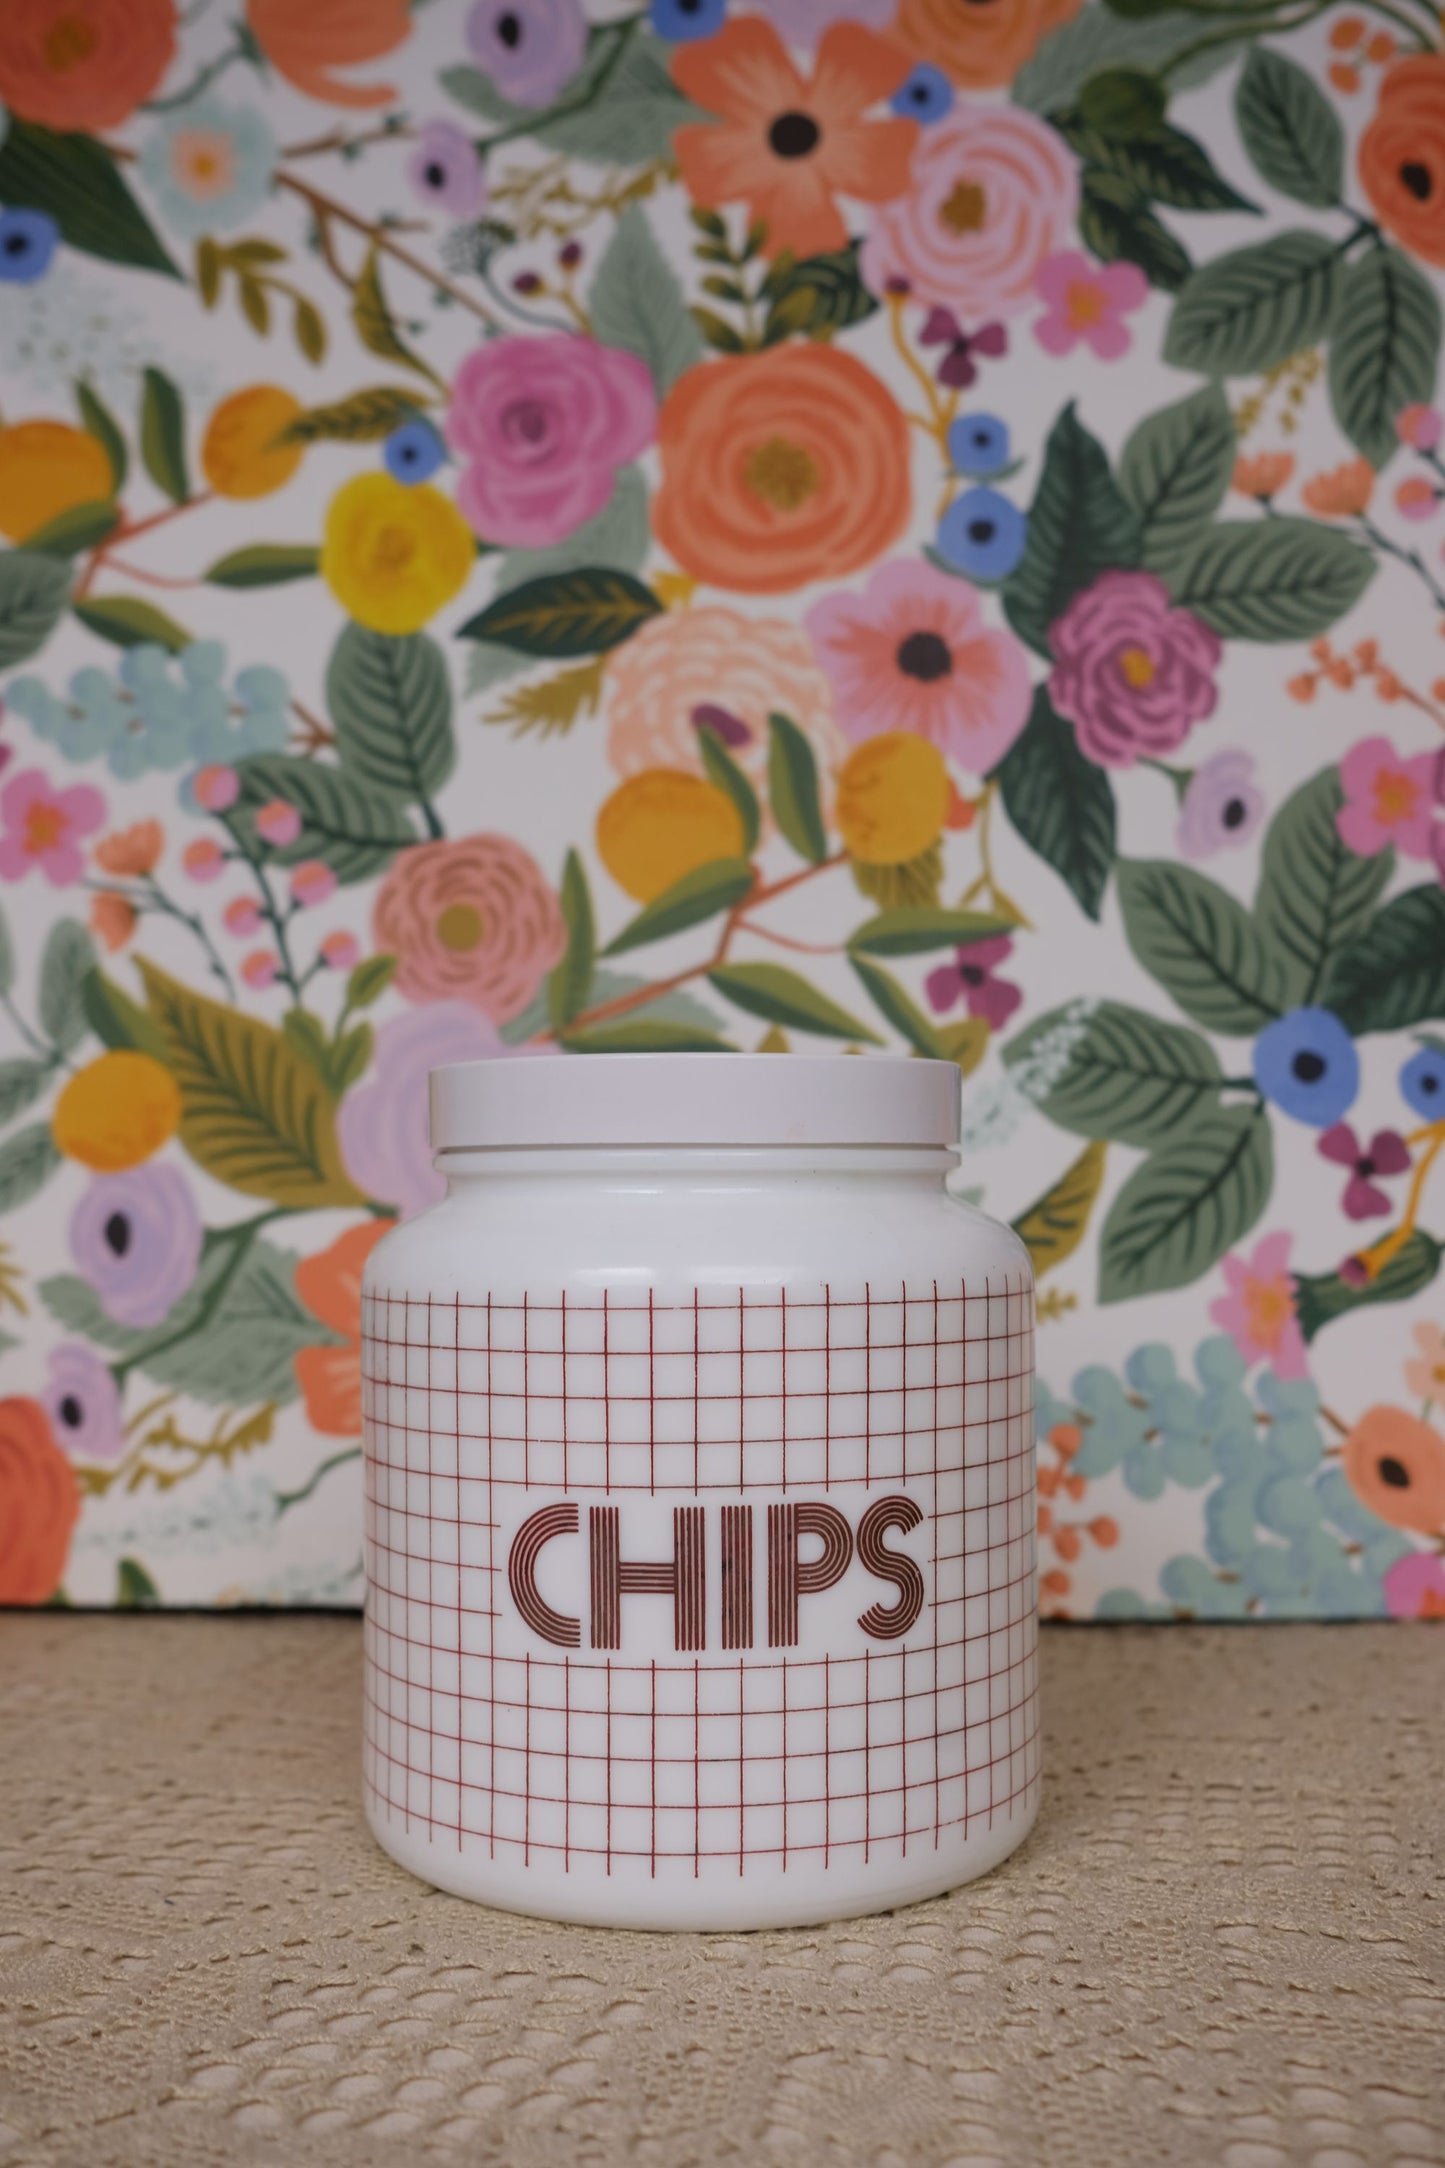 Grand pot à chips en arcopal